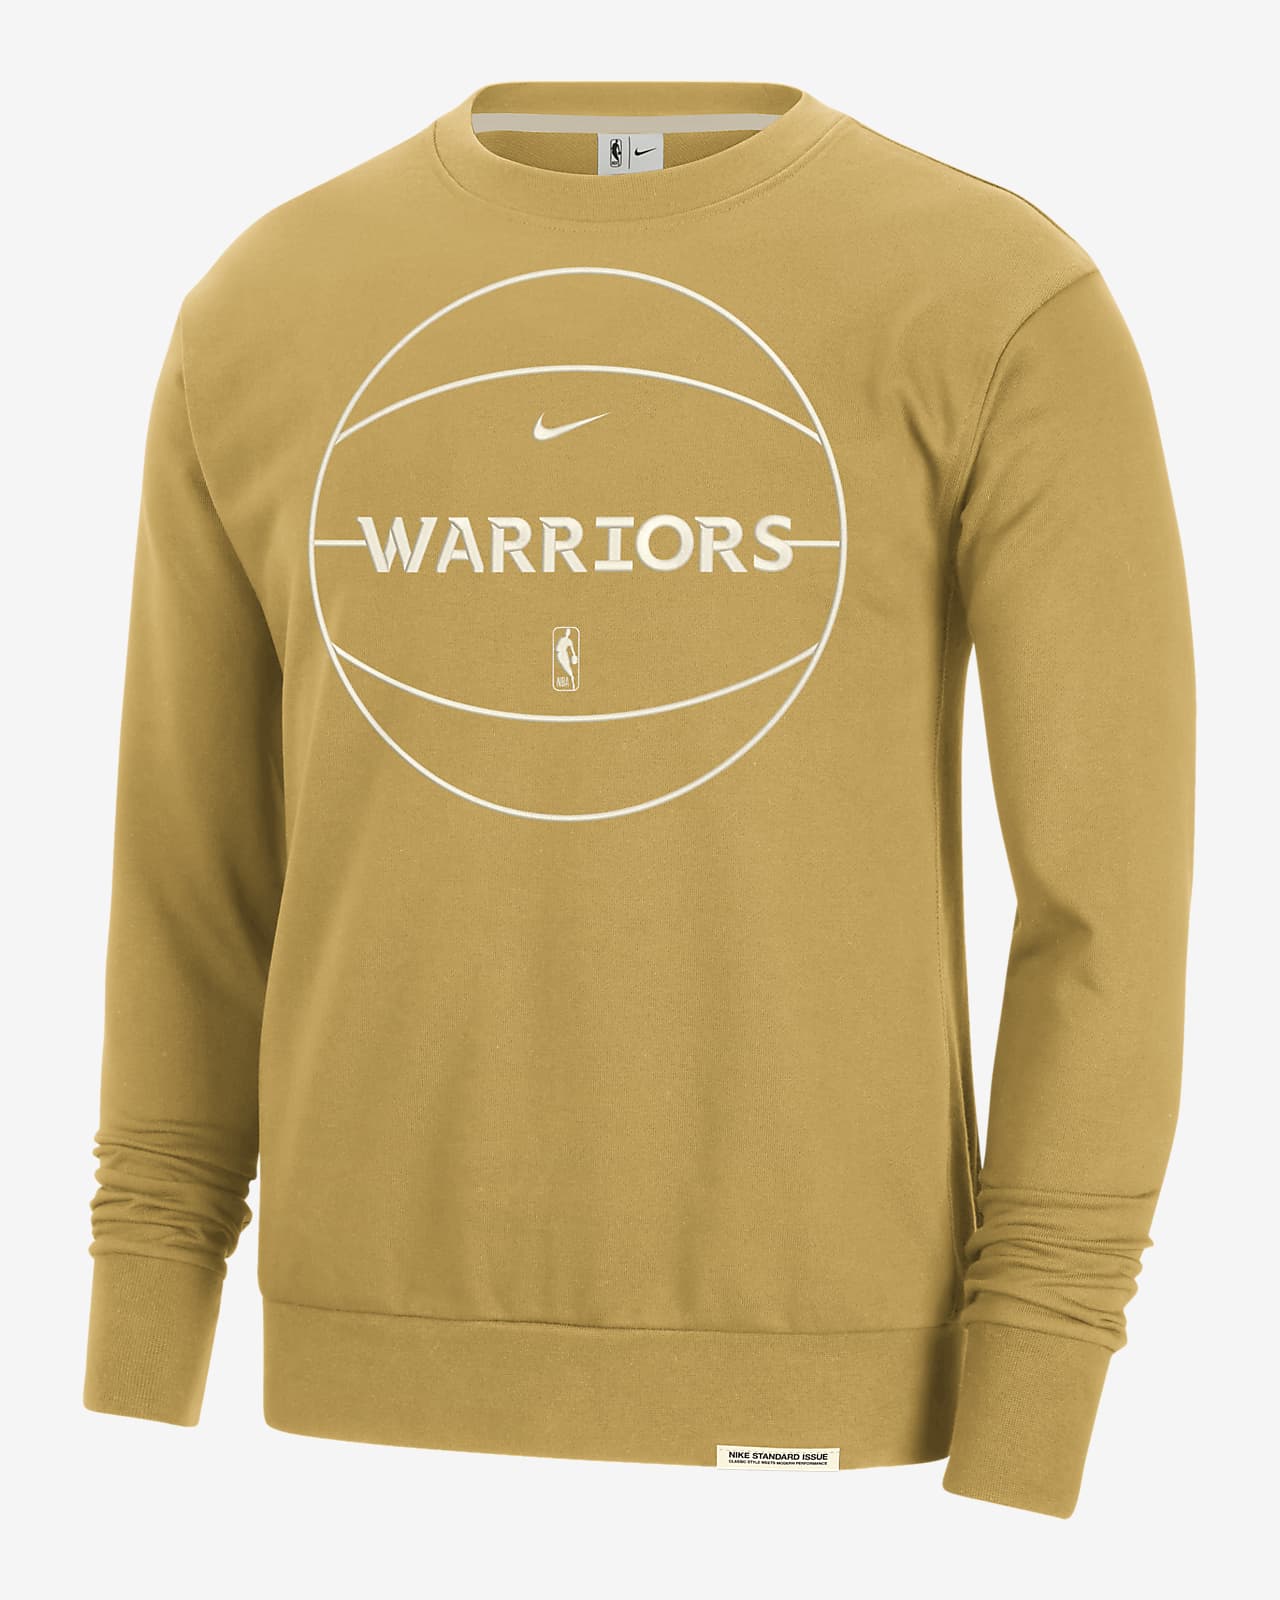 Golden State Warriors Standard Issue Men's Nike Dri-FIT NBA Sweatshirt